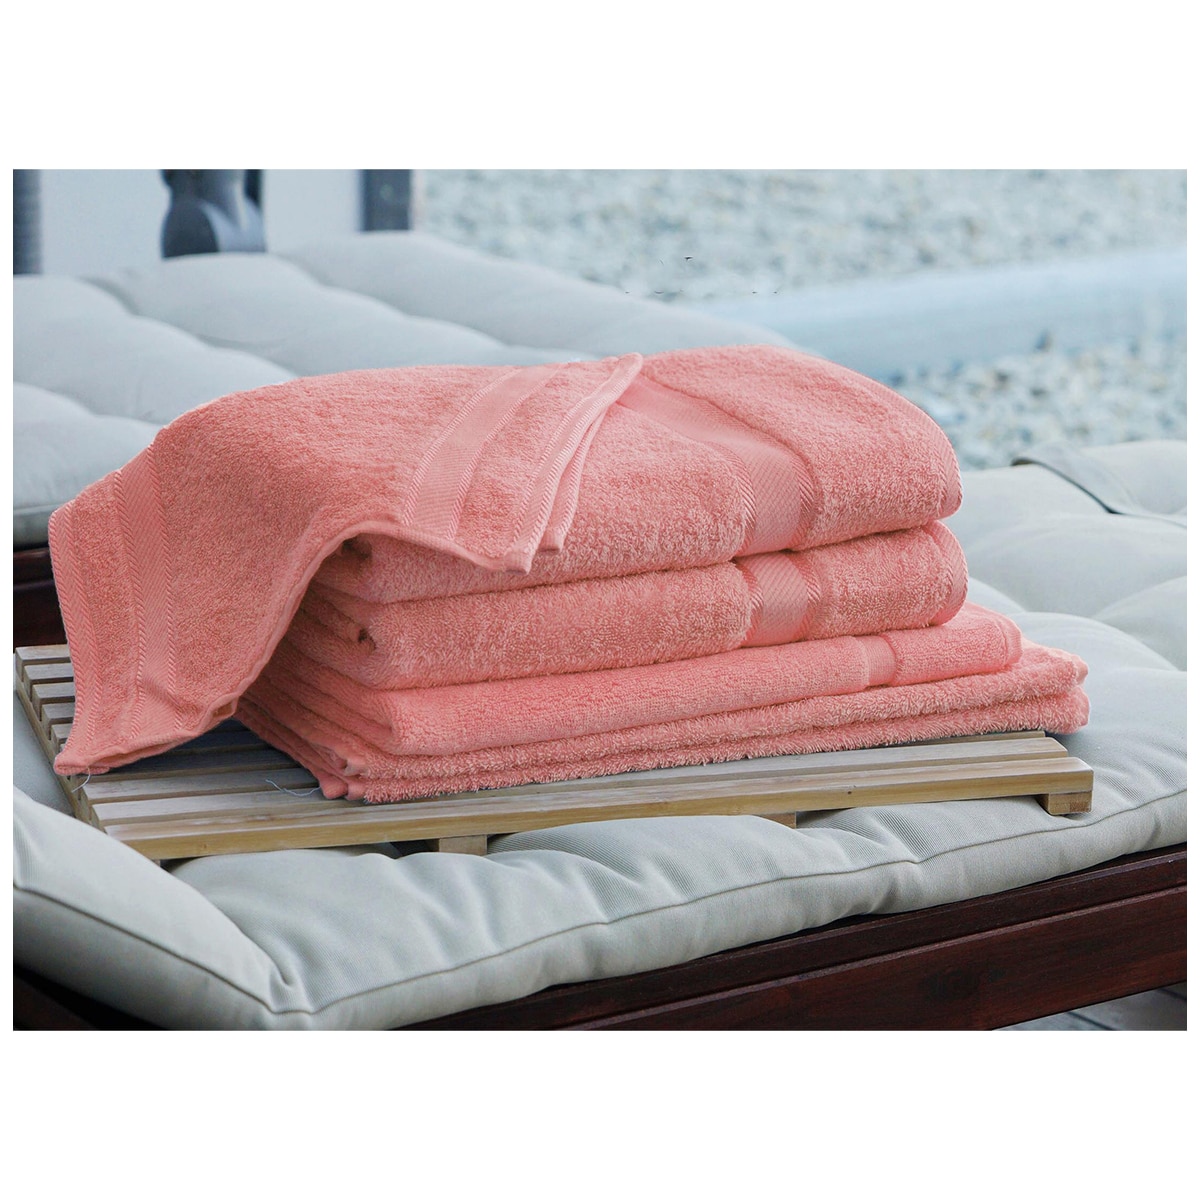 Kingtex Plain dyed 100% Combed Cotton towel range 550gsm Bath Sheet set 7 piece - Rust